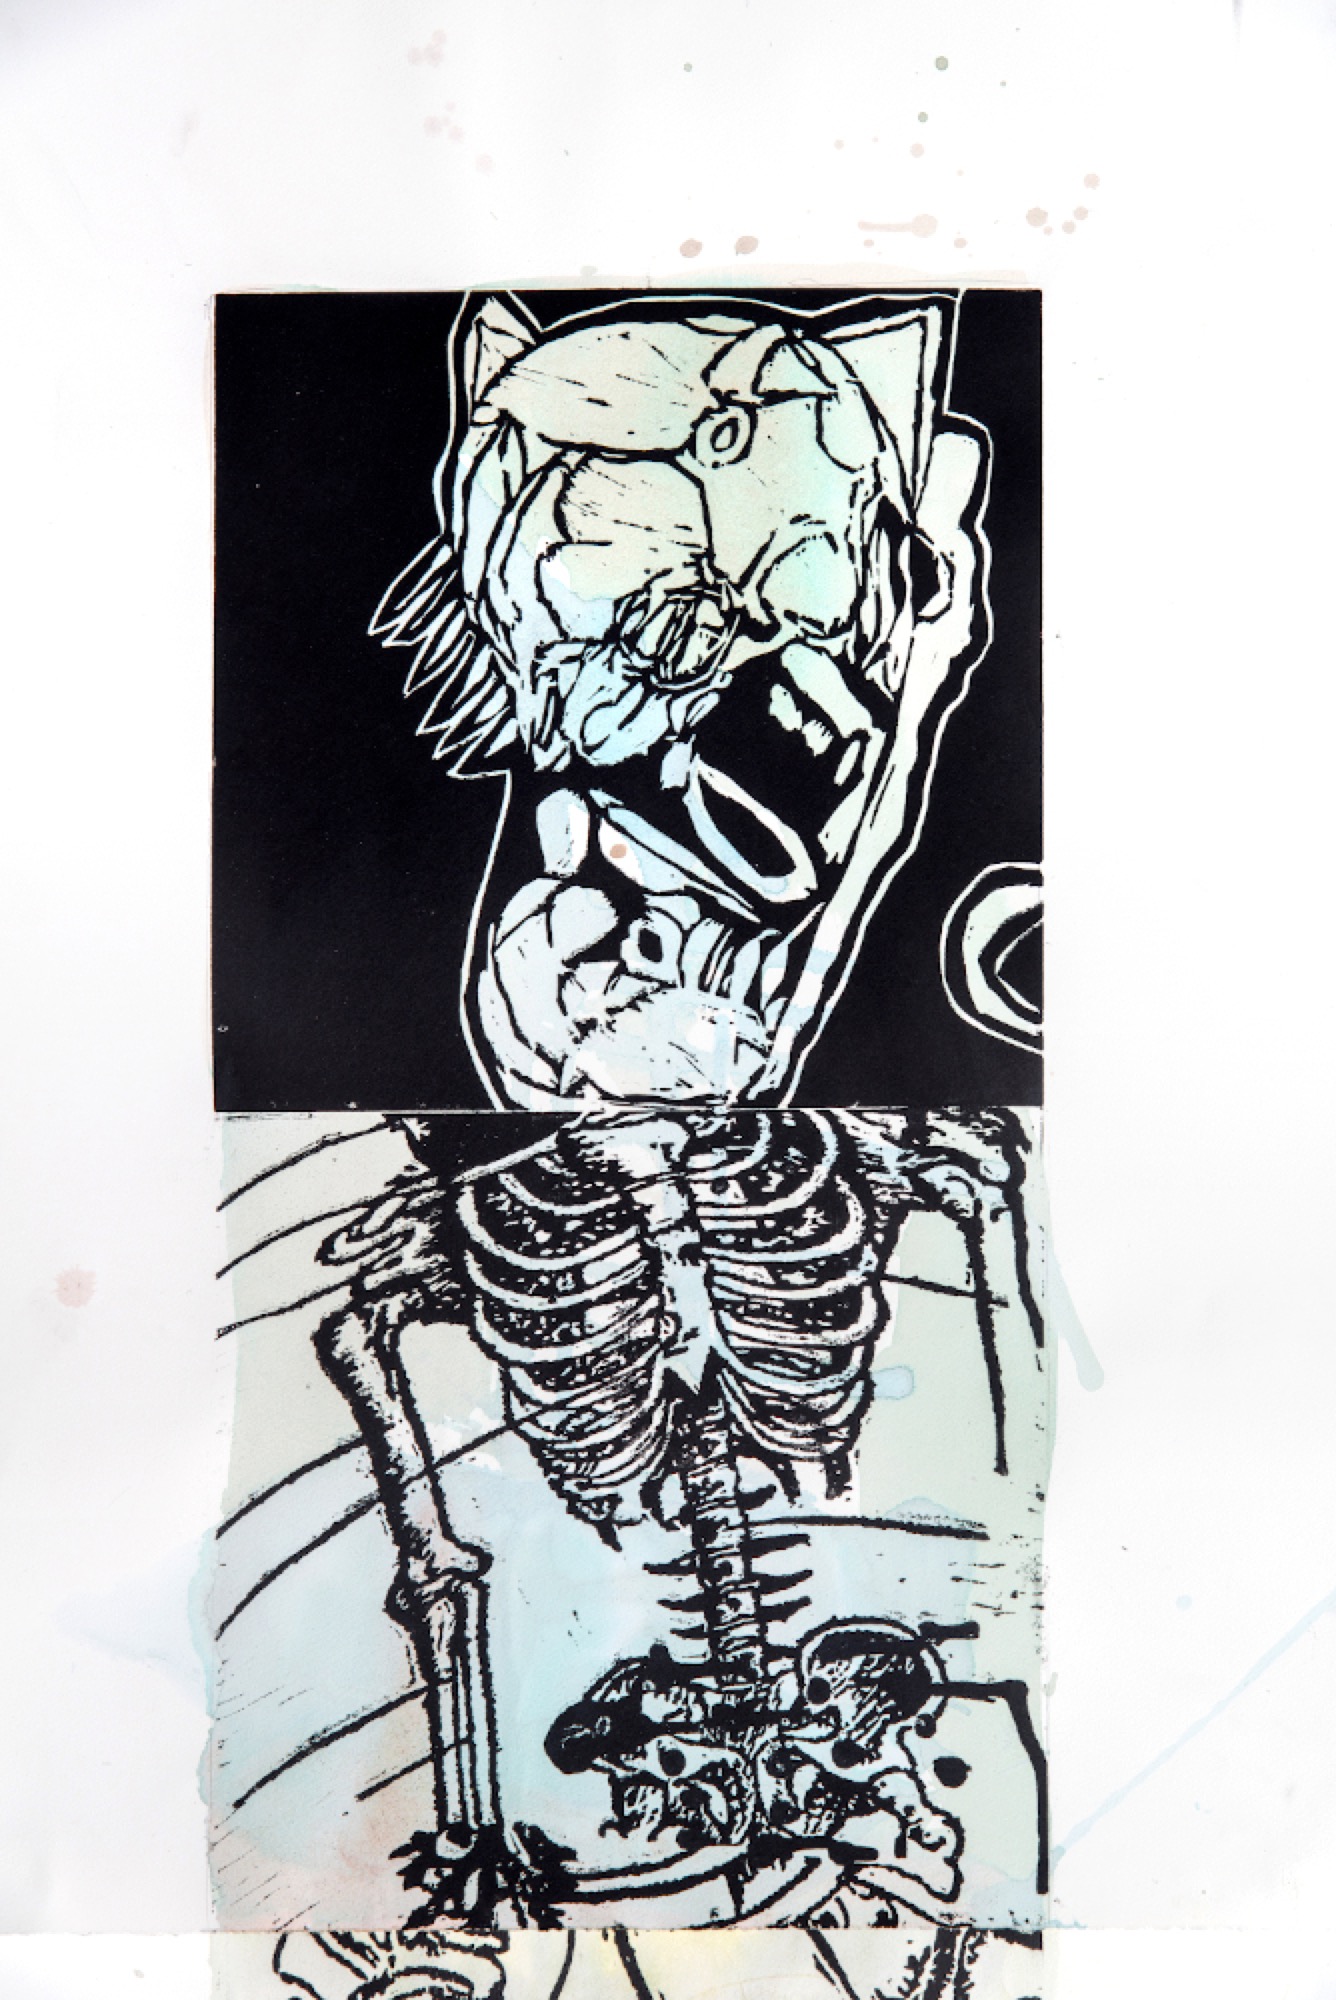 Bronwyn Hack and Heather Shimmen, <em>Exquisite Corpse</em>, 2019, lino cut on rag paper, unique print, 330 x 56 cm, detail.